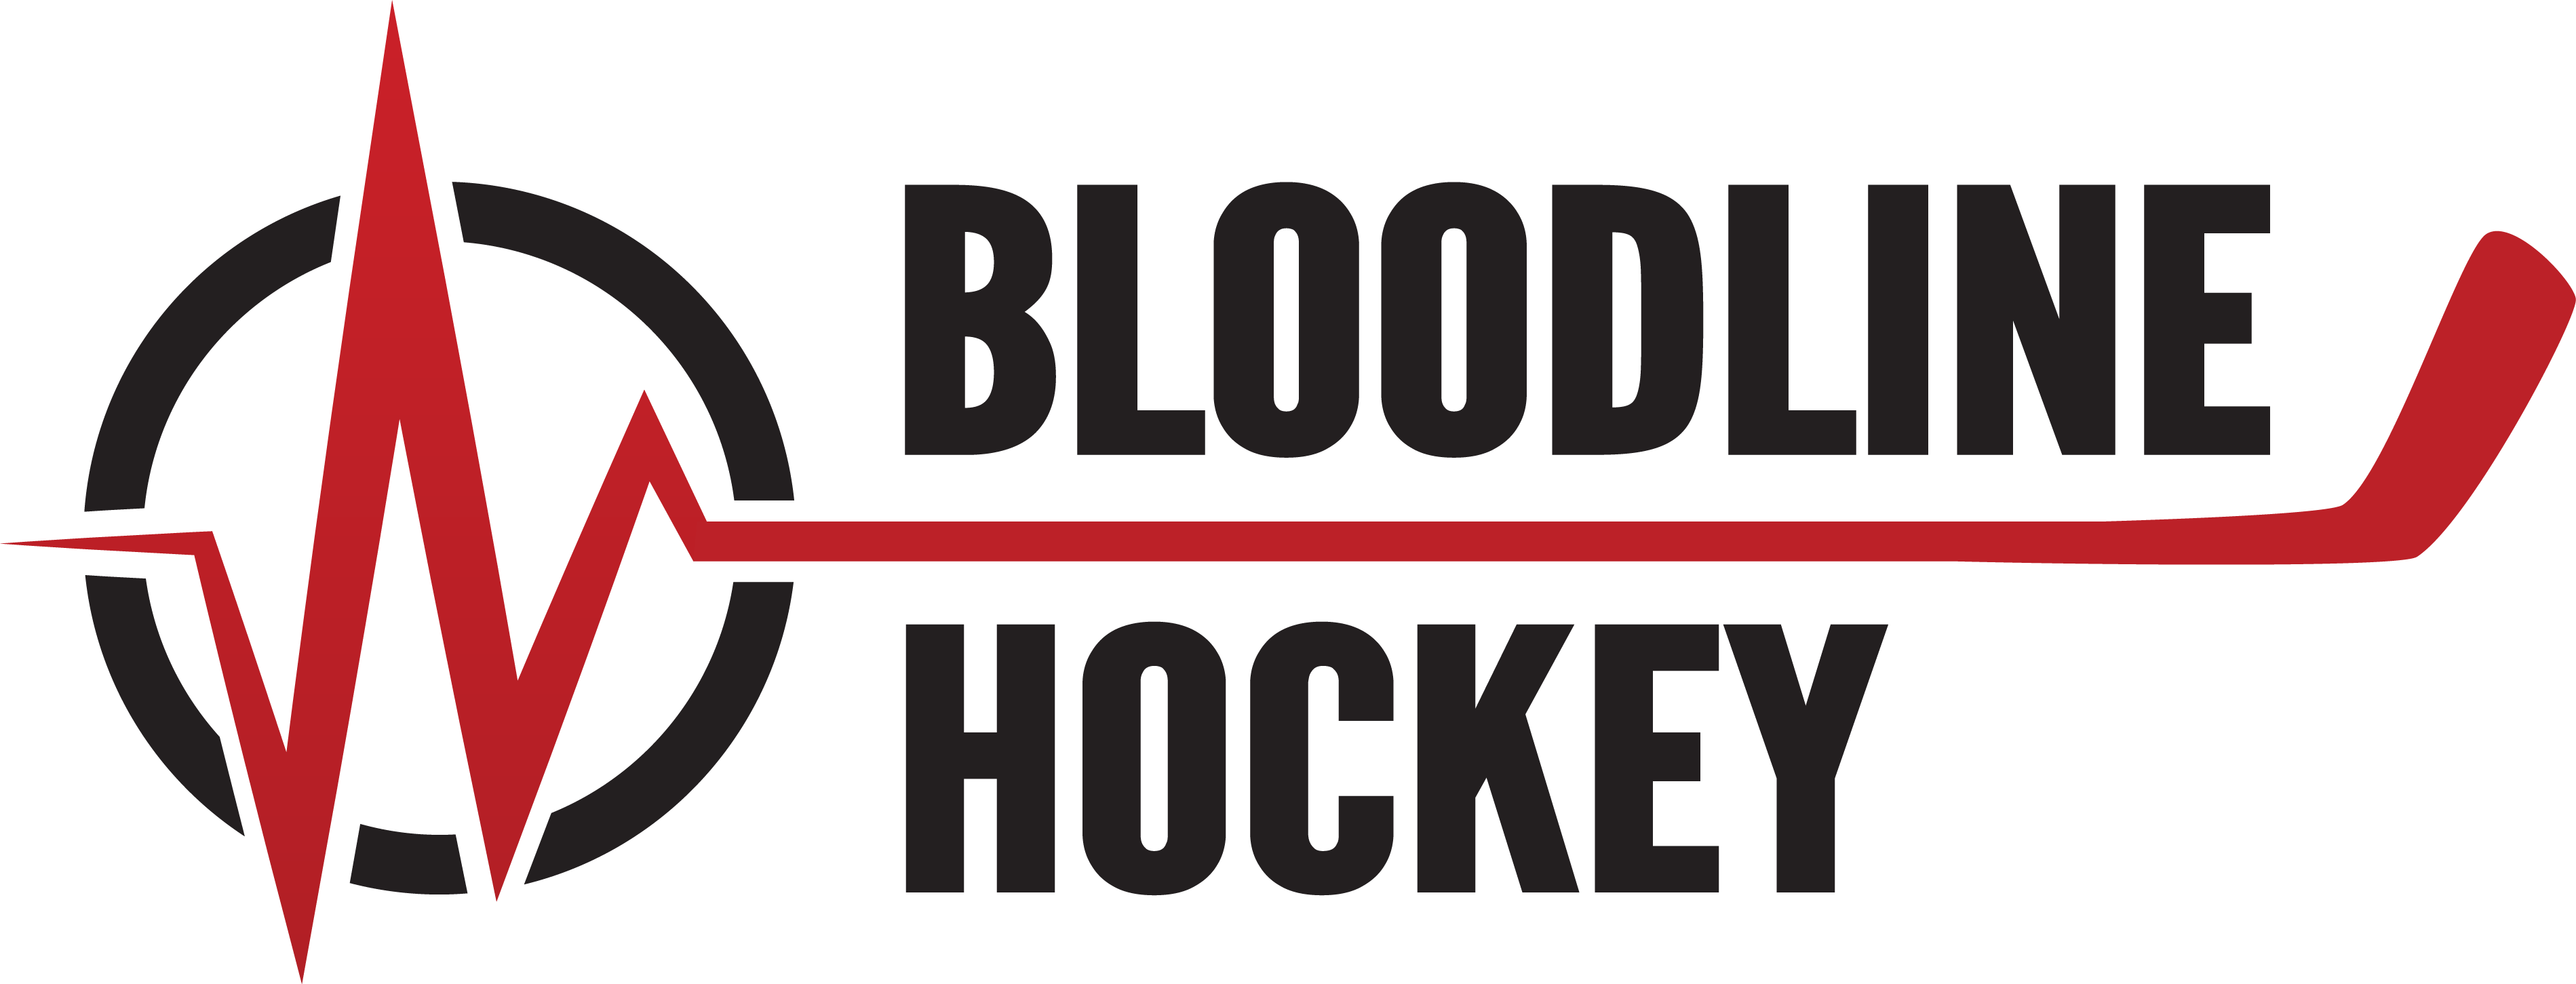 Bloodline Hockey